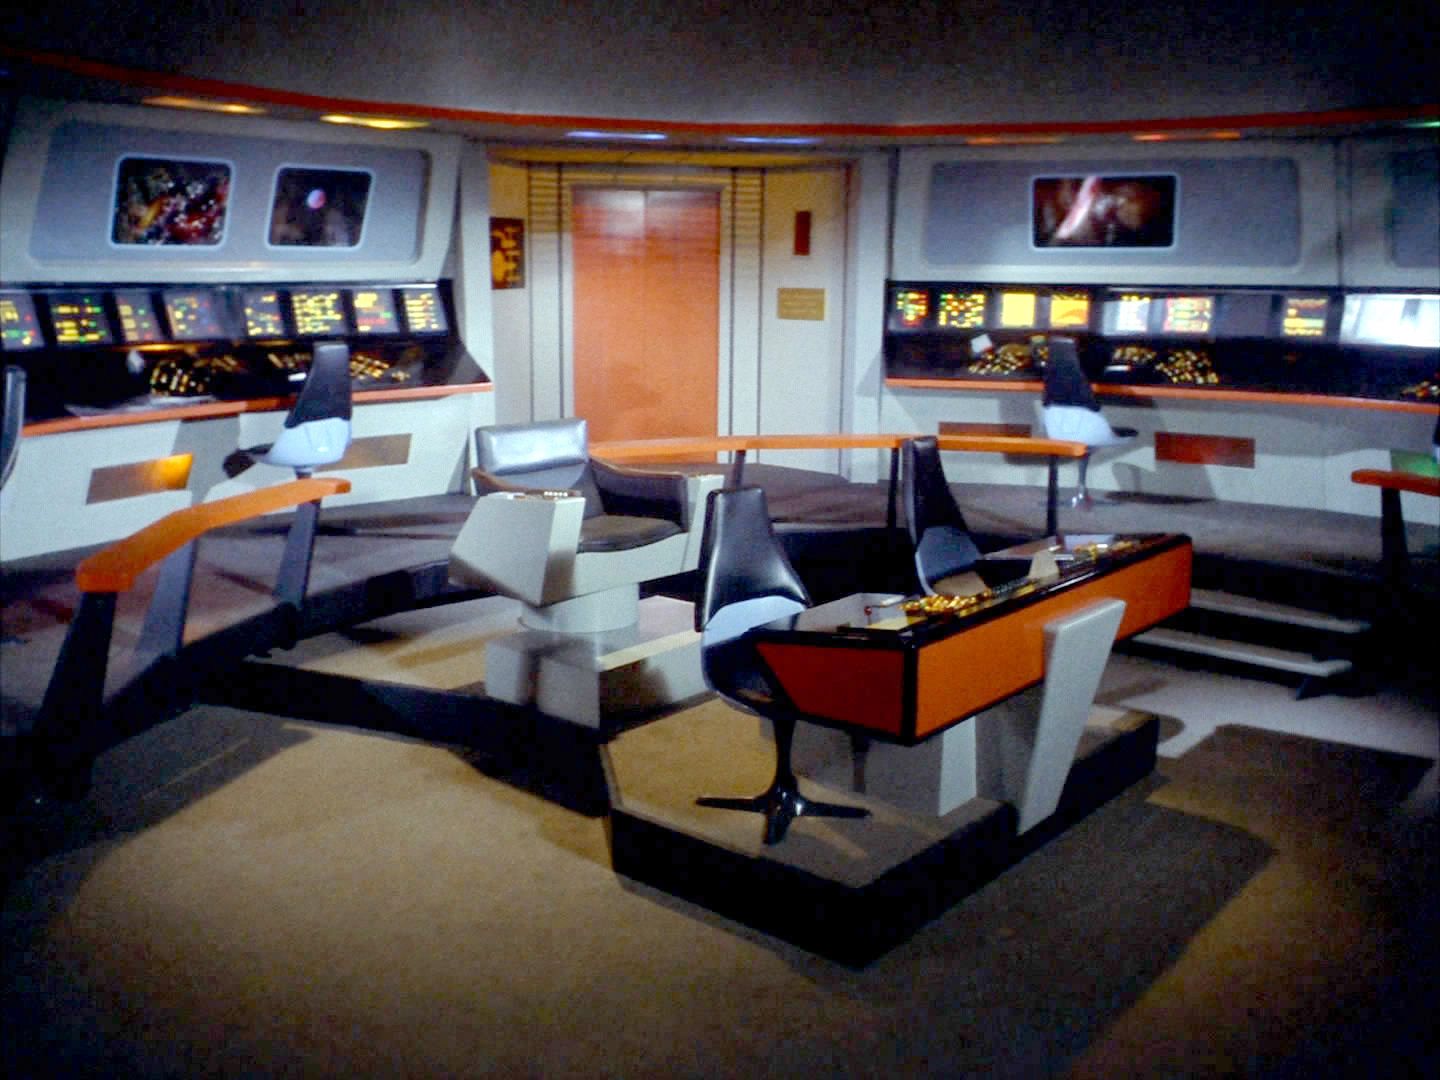 “#StarTrek The NCC-1701 USS Enterprise's bridge through time (1966...